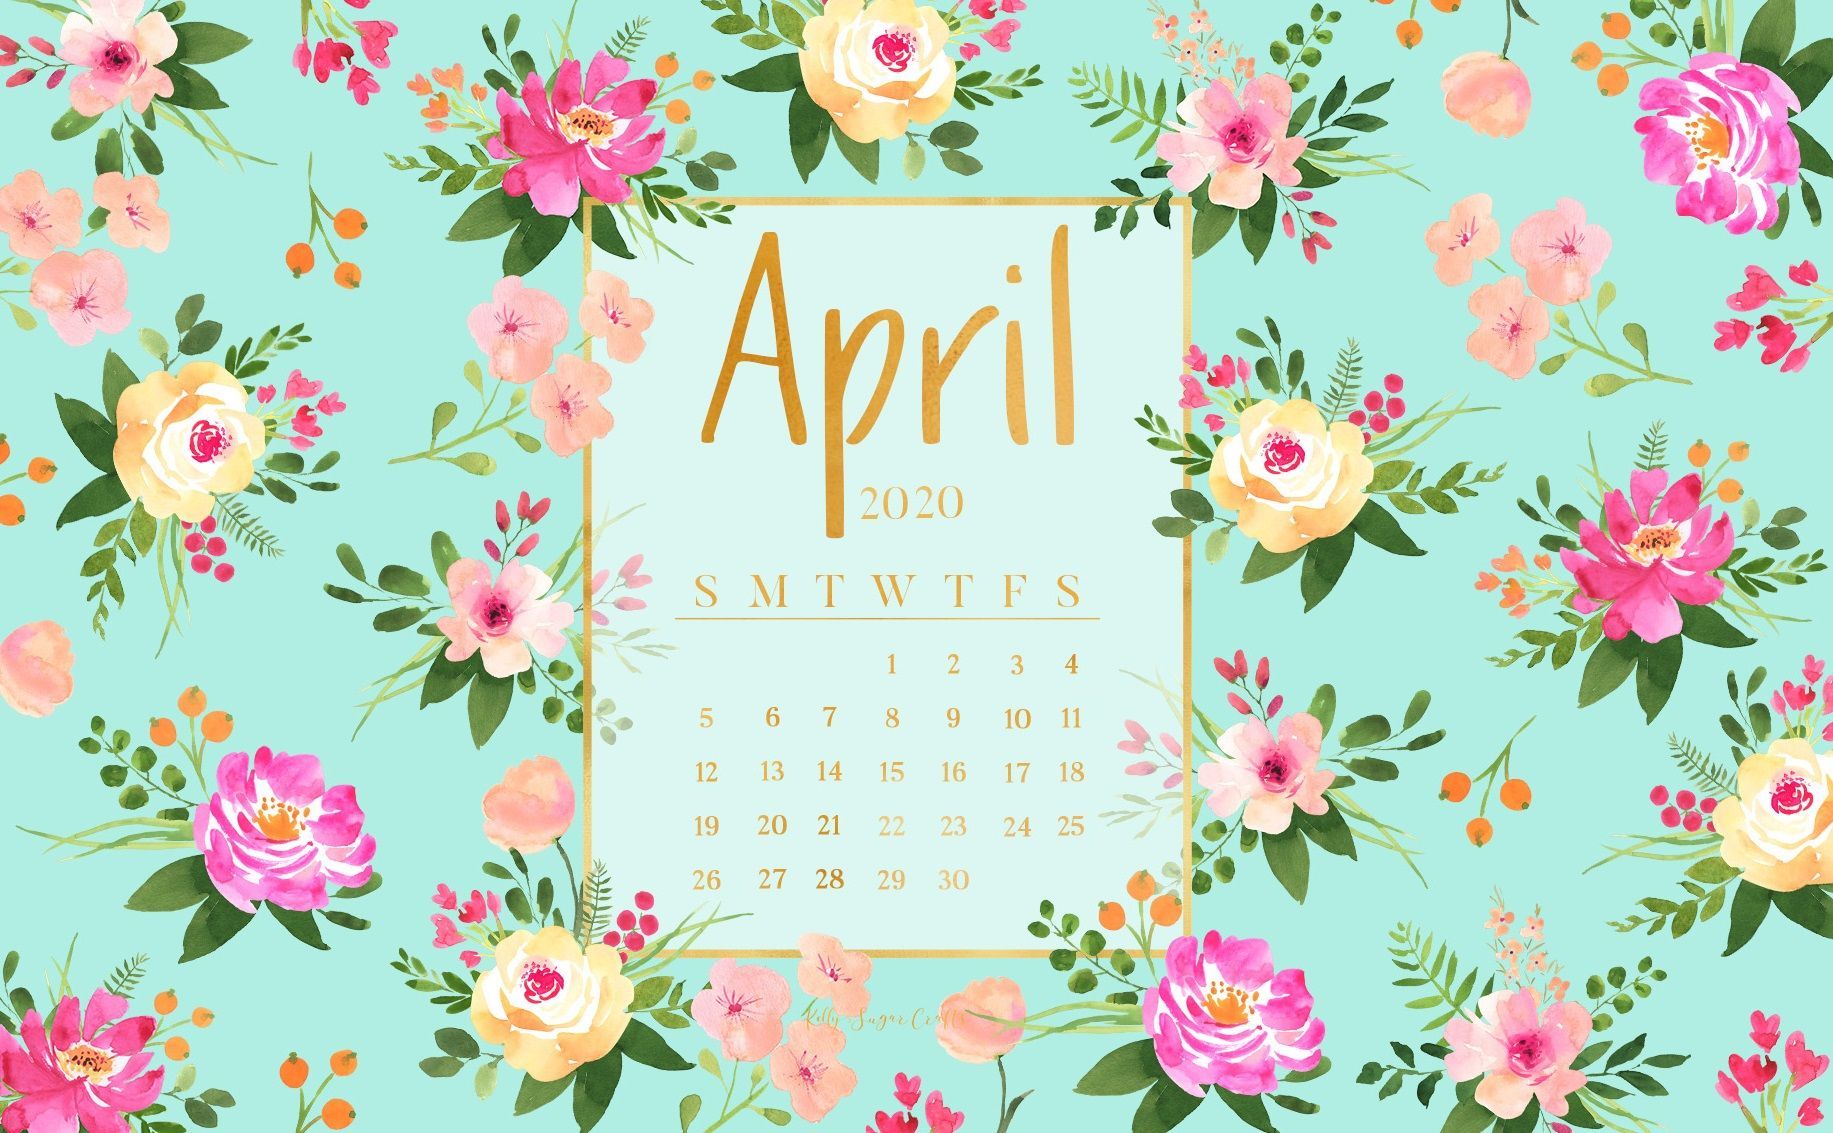 April 2022 Calendar Desktop Wallpaper